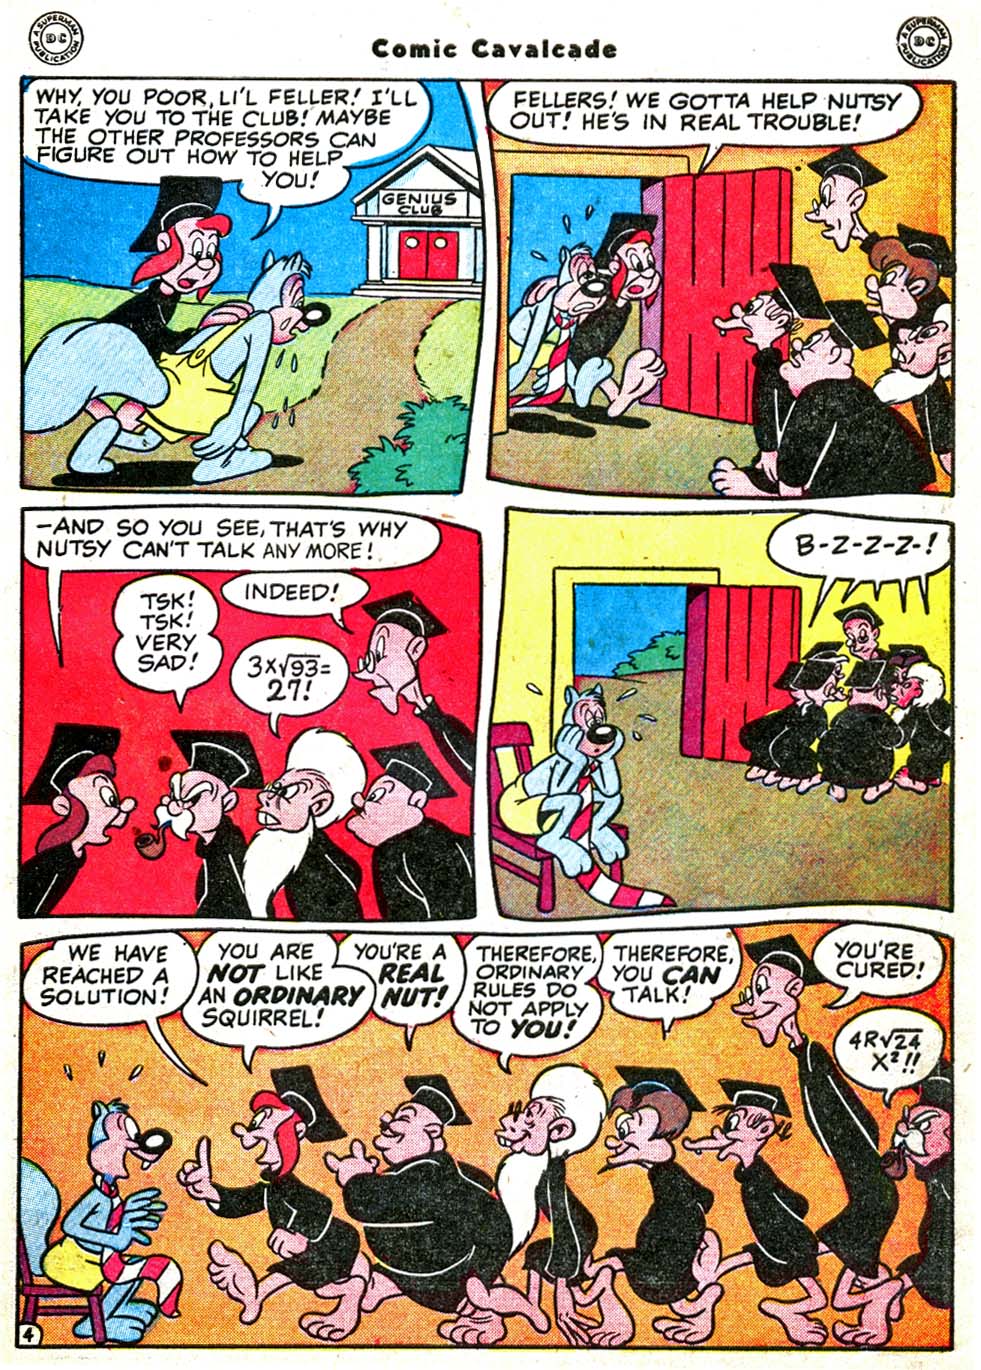 Comic Cavalcade issue 31 - Page 39